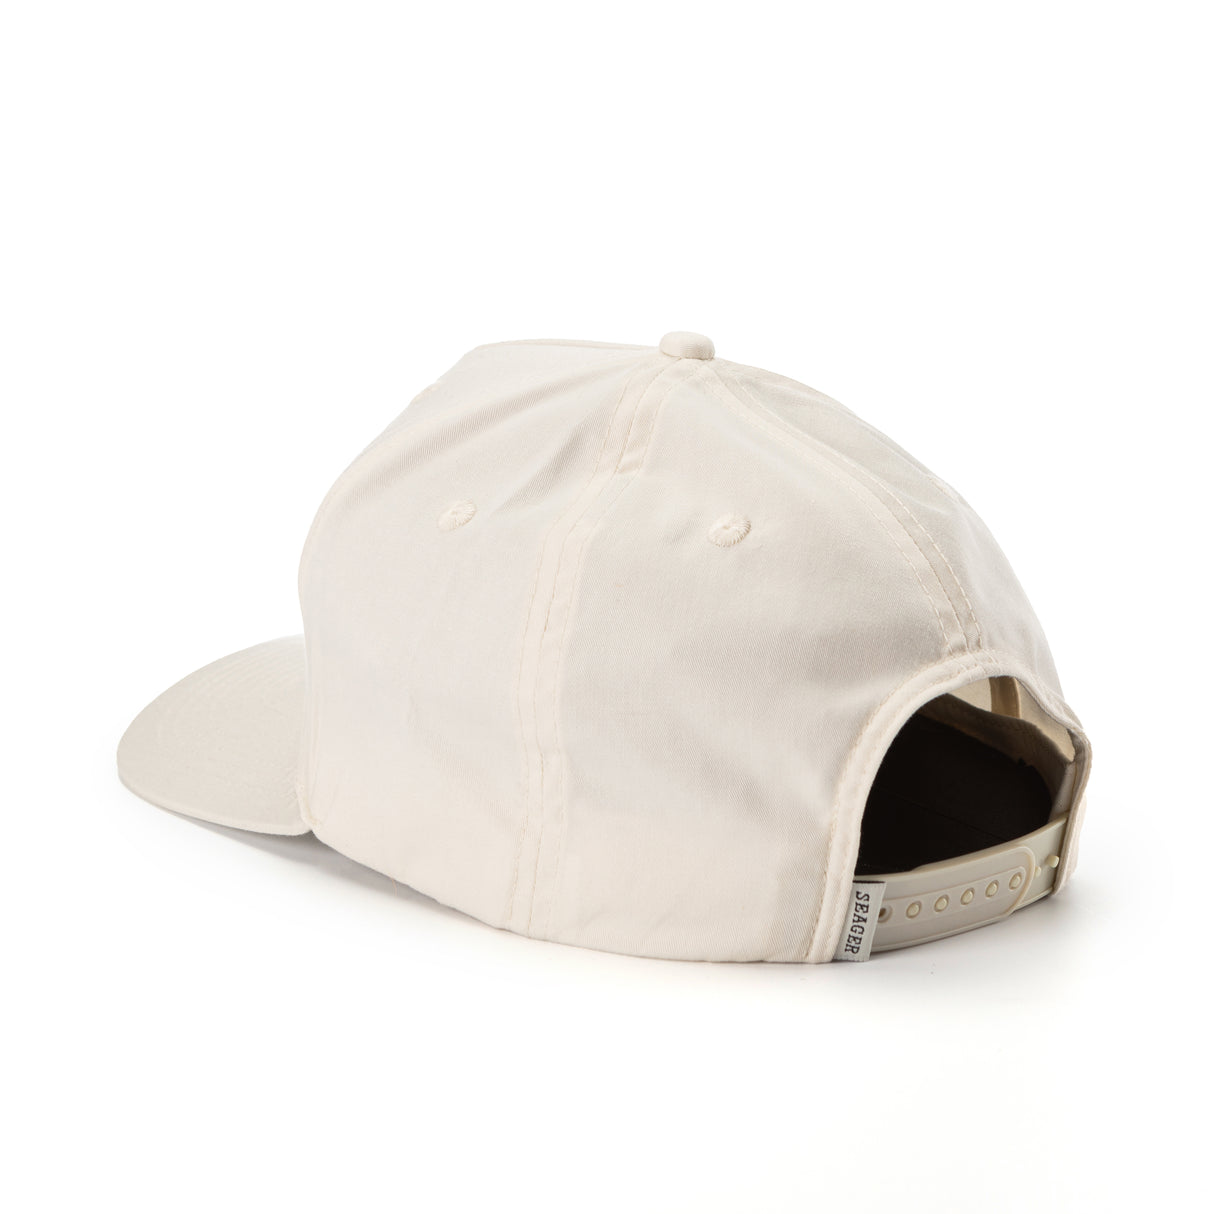 Seager Bradley White Snapback Hat